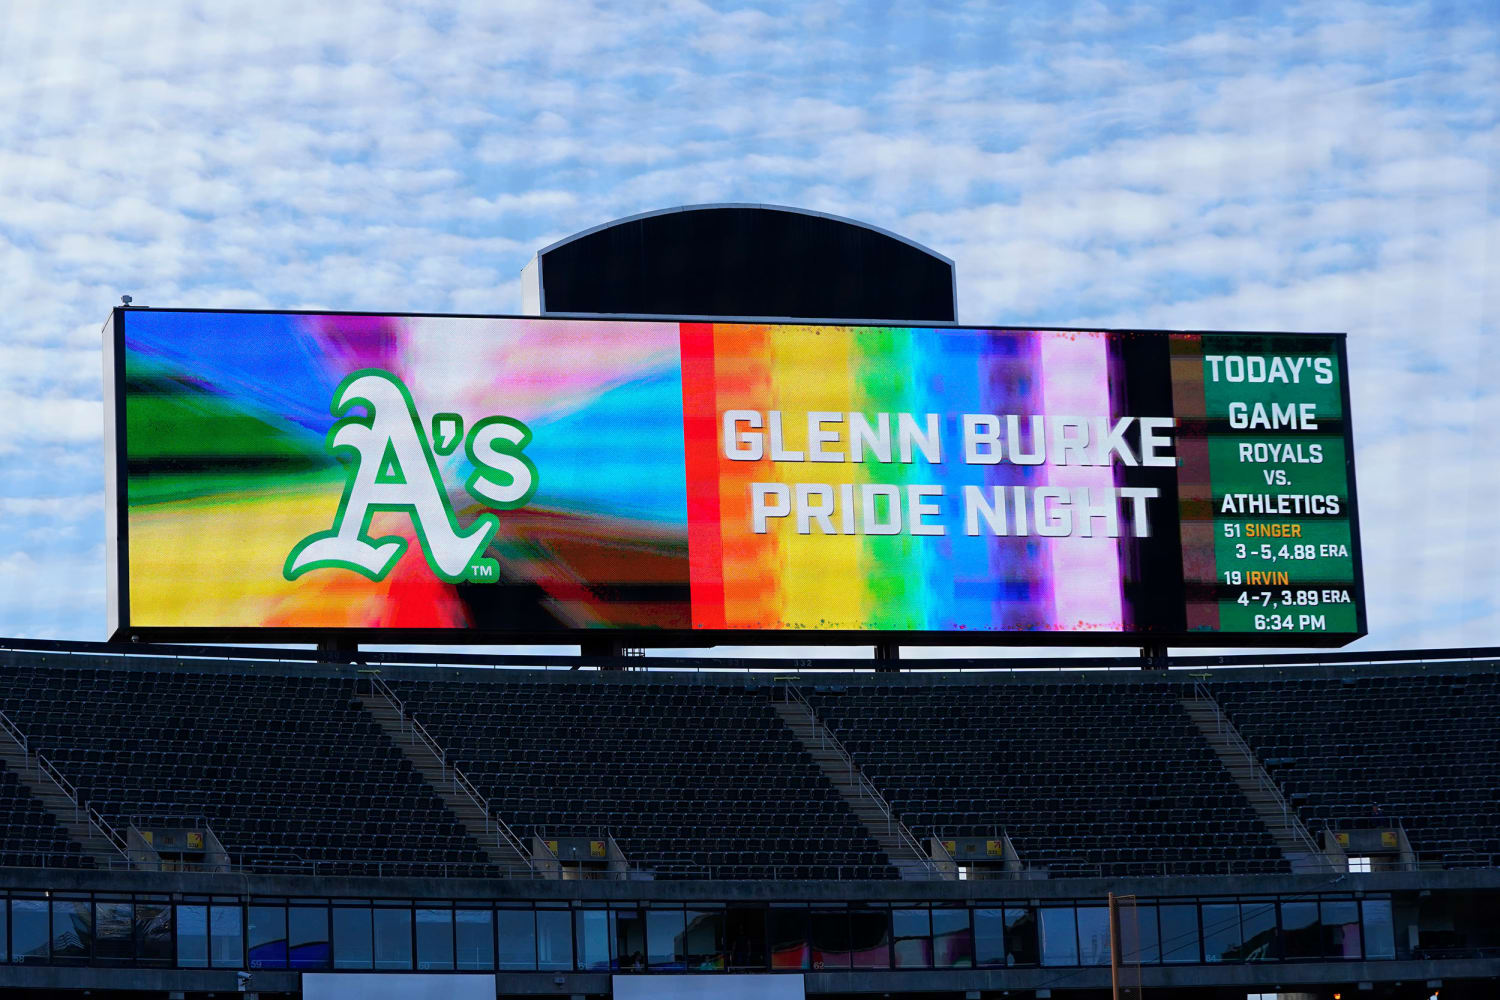 Dodgers Pride Night will honor Glenn Burke this season - Outsports